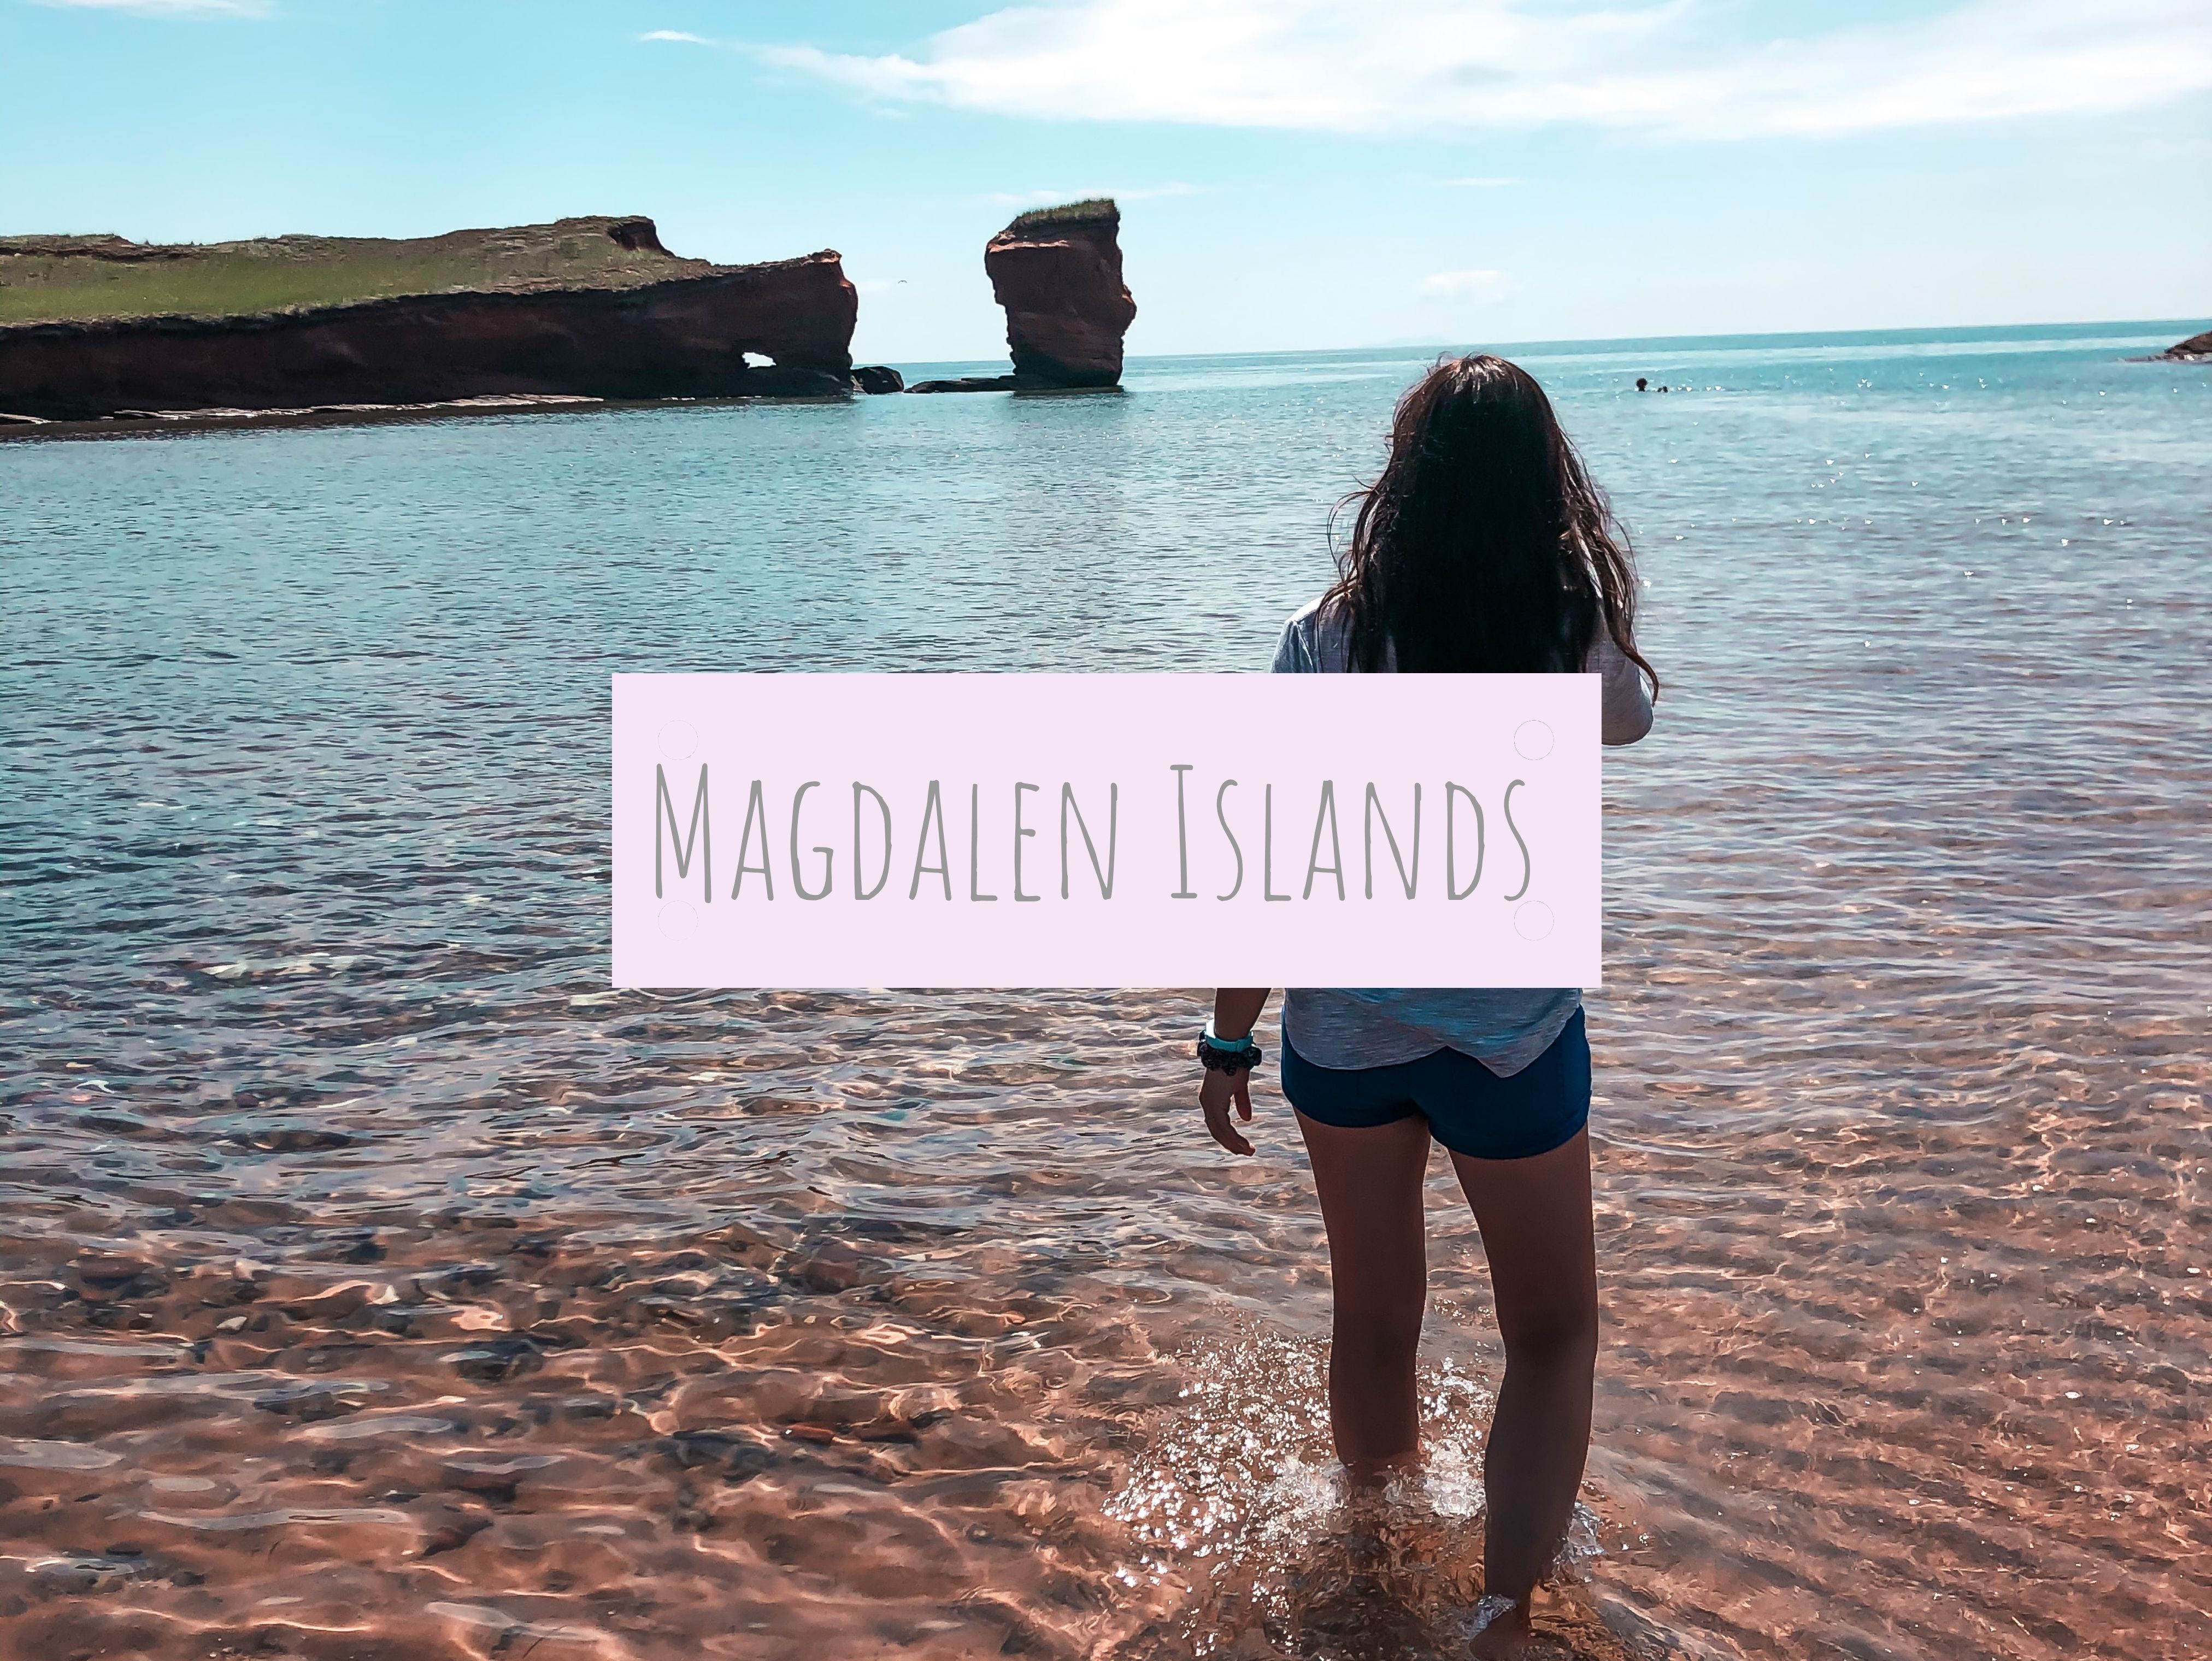 Magdalen islands